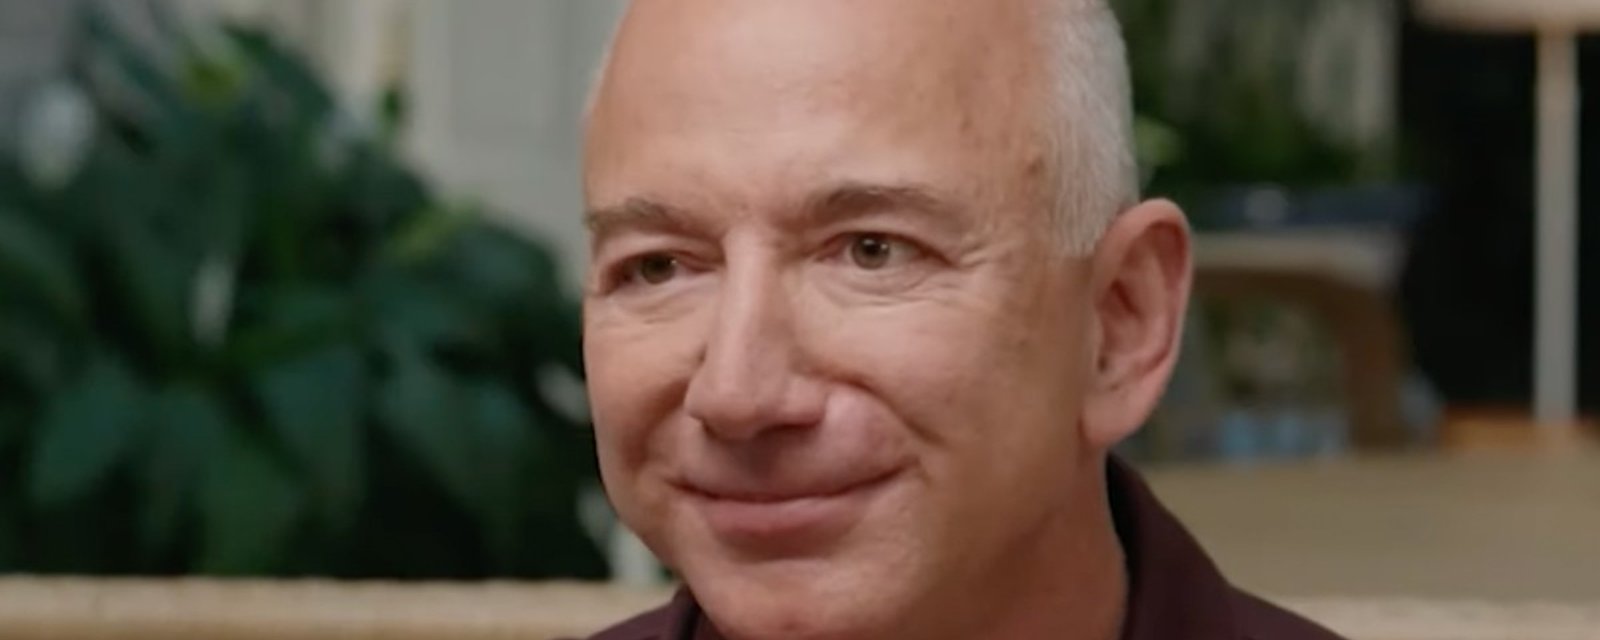 Jeff Bezos va donner la majorité de sa fortune